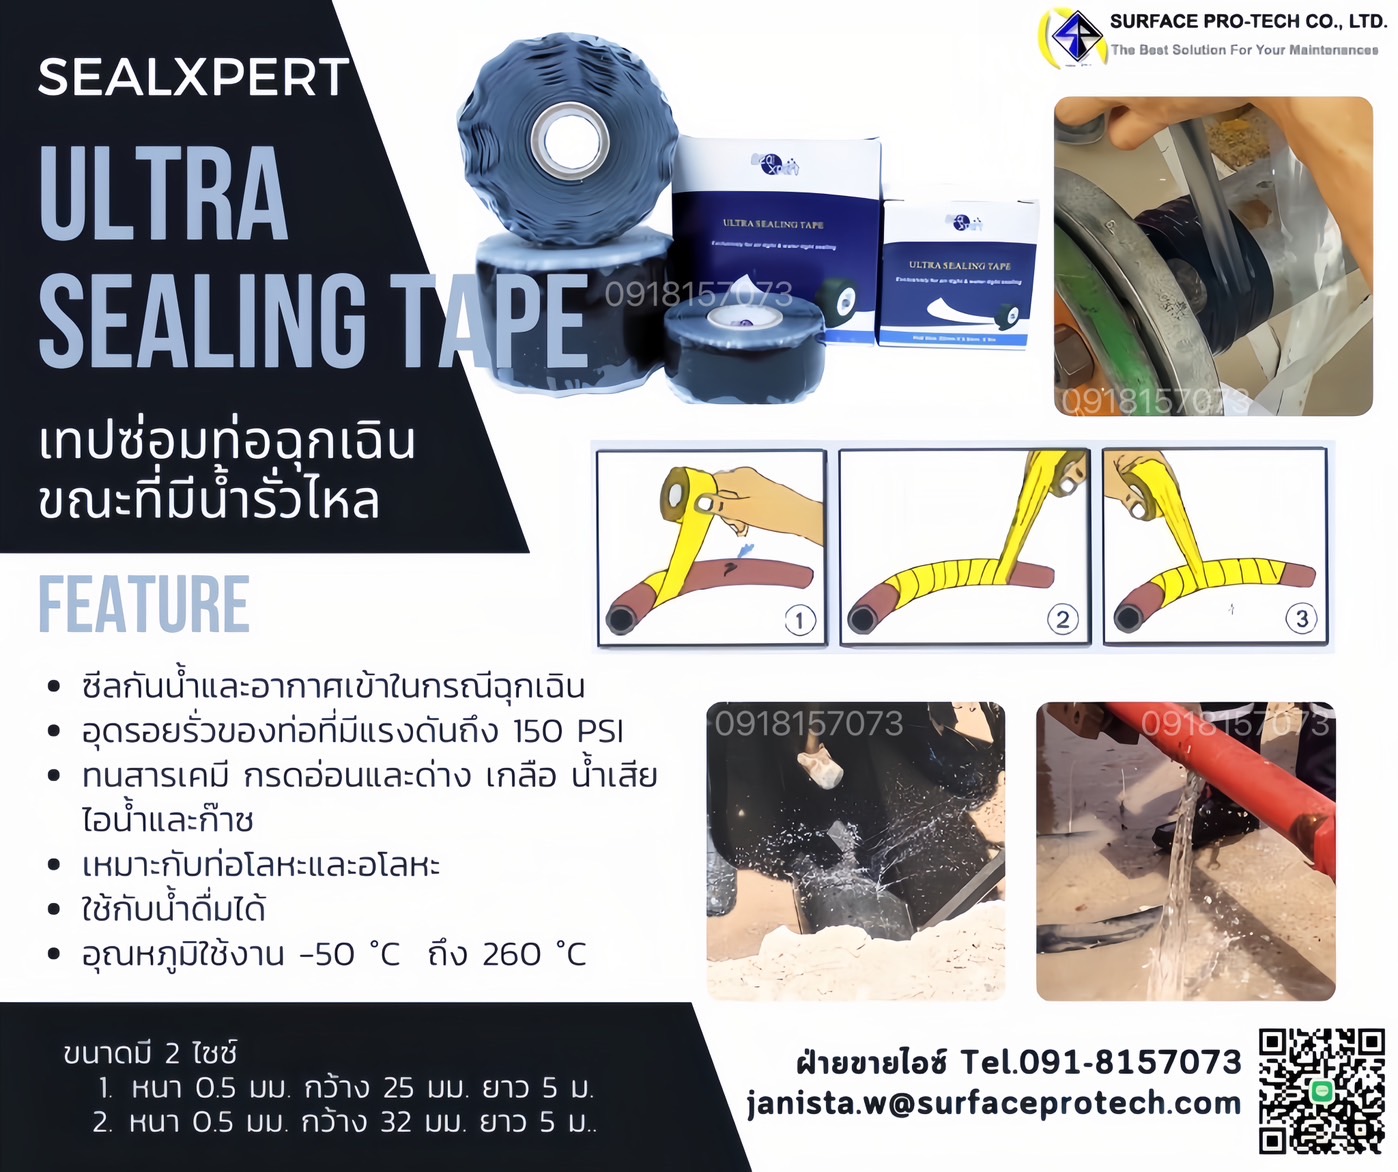 Ultra Sealing Tape เทปซ่อมท่อรั่วรุนแรงดันสูง ซีลกันน้ำ ข้อต่อที่รั่ว เทปซ่อมท่อปิดลดแรงดันน้ำ-ติดต่อฝ่ายขาย(ไอซ์)0918157073ค่ะ  รูปที่ 1